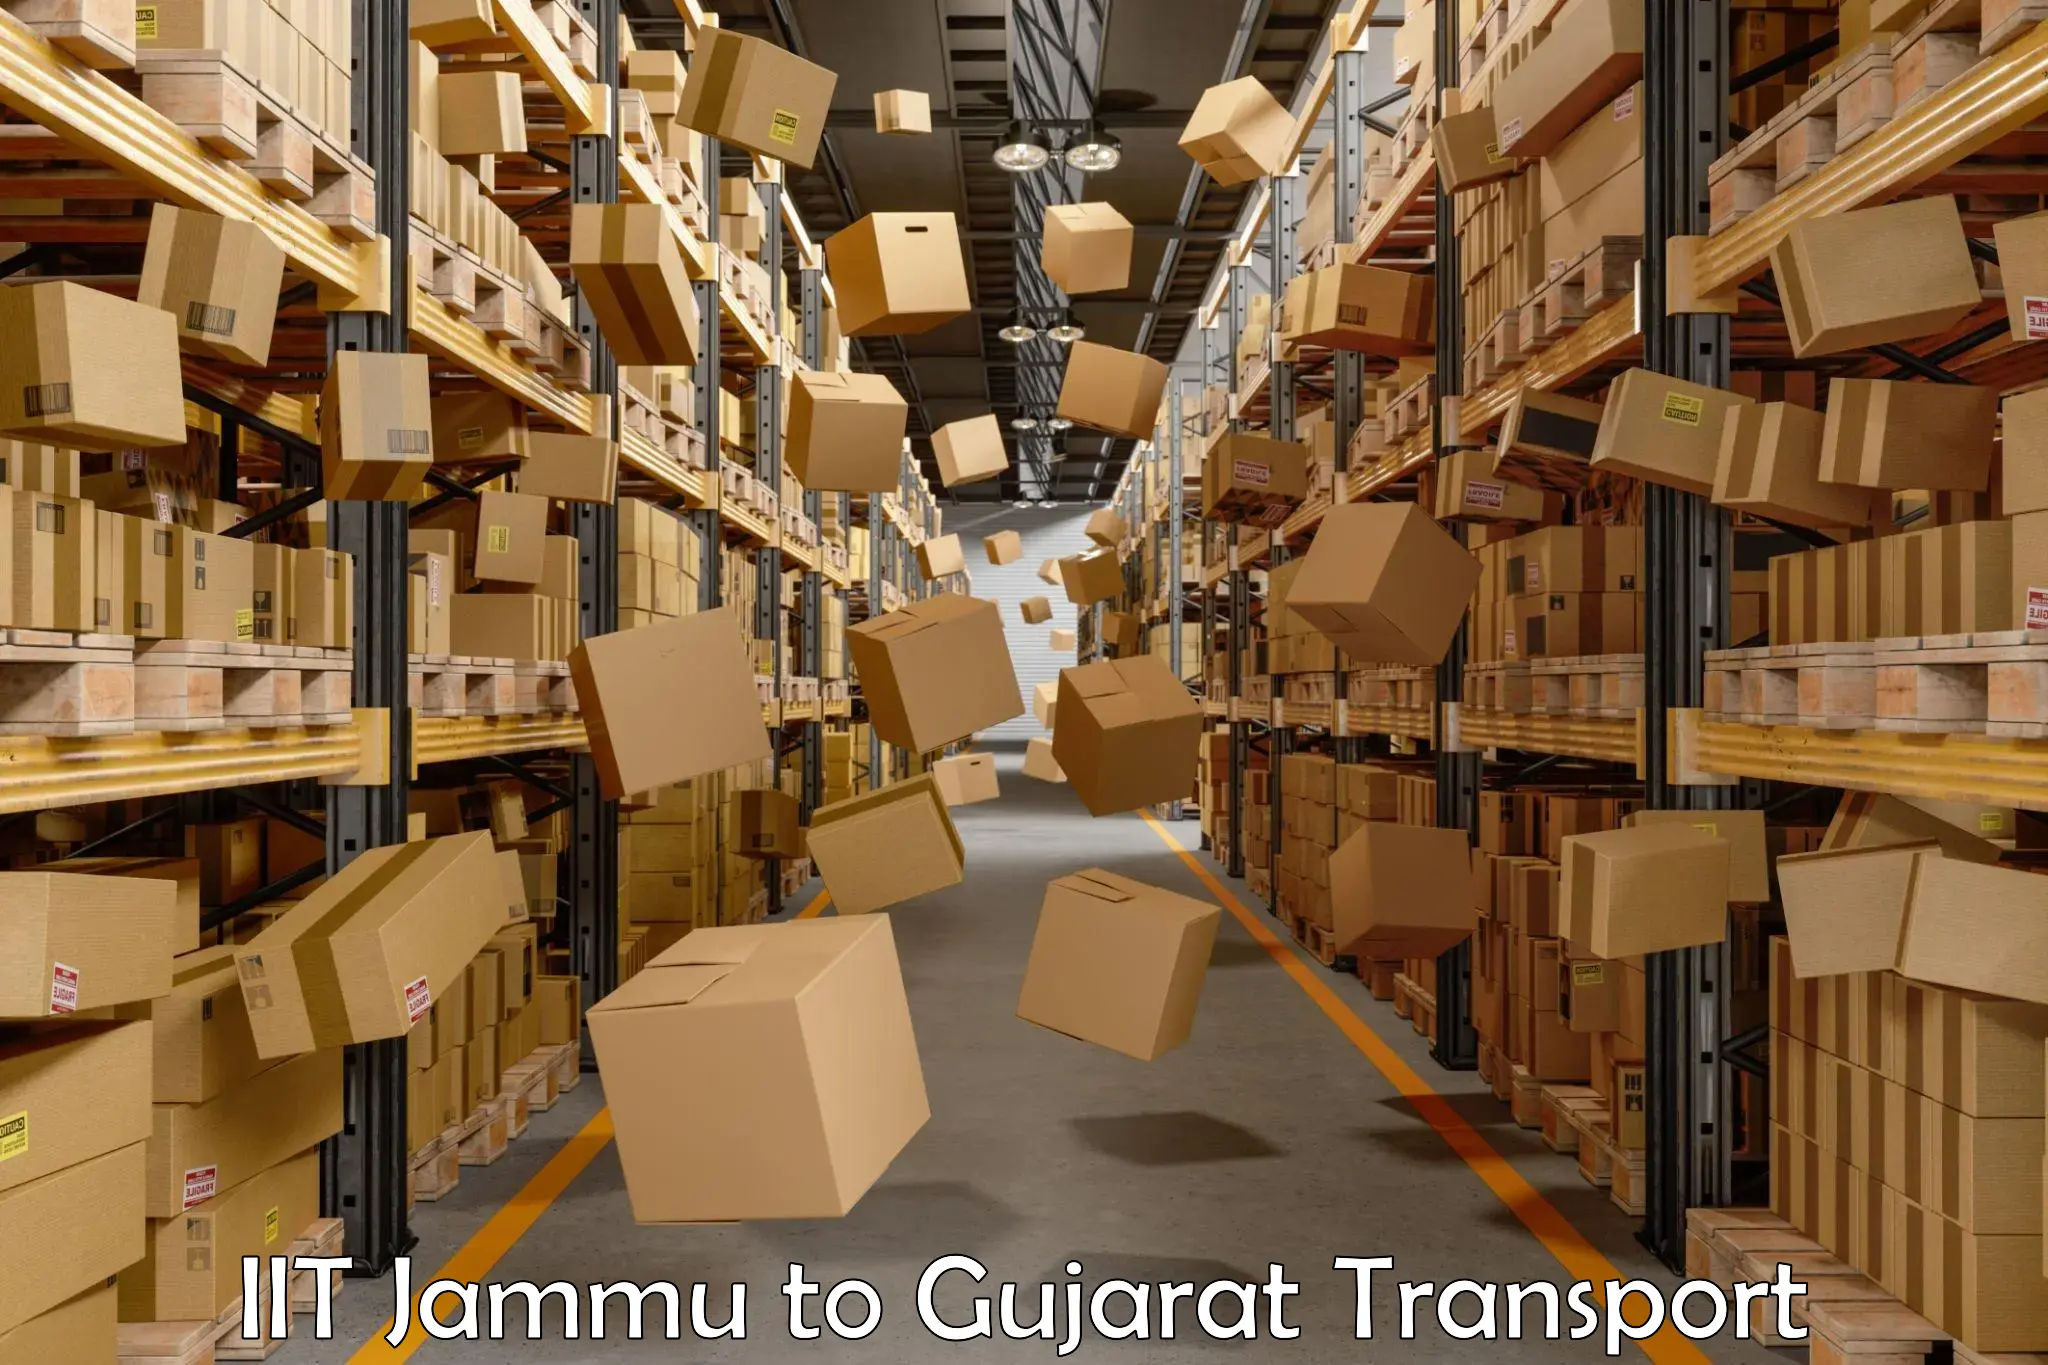 Daily transport service IIT Jammu to Gujarat